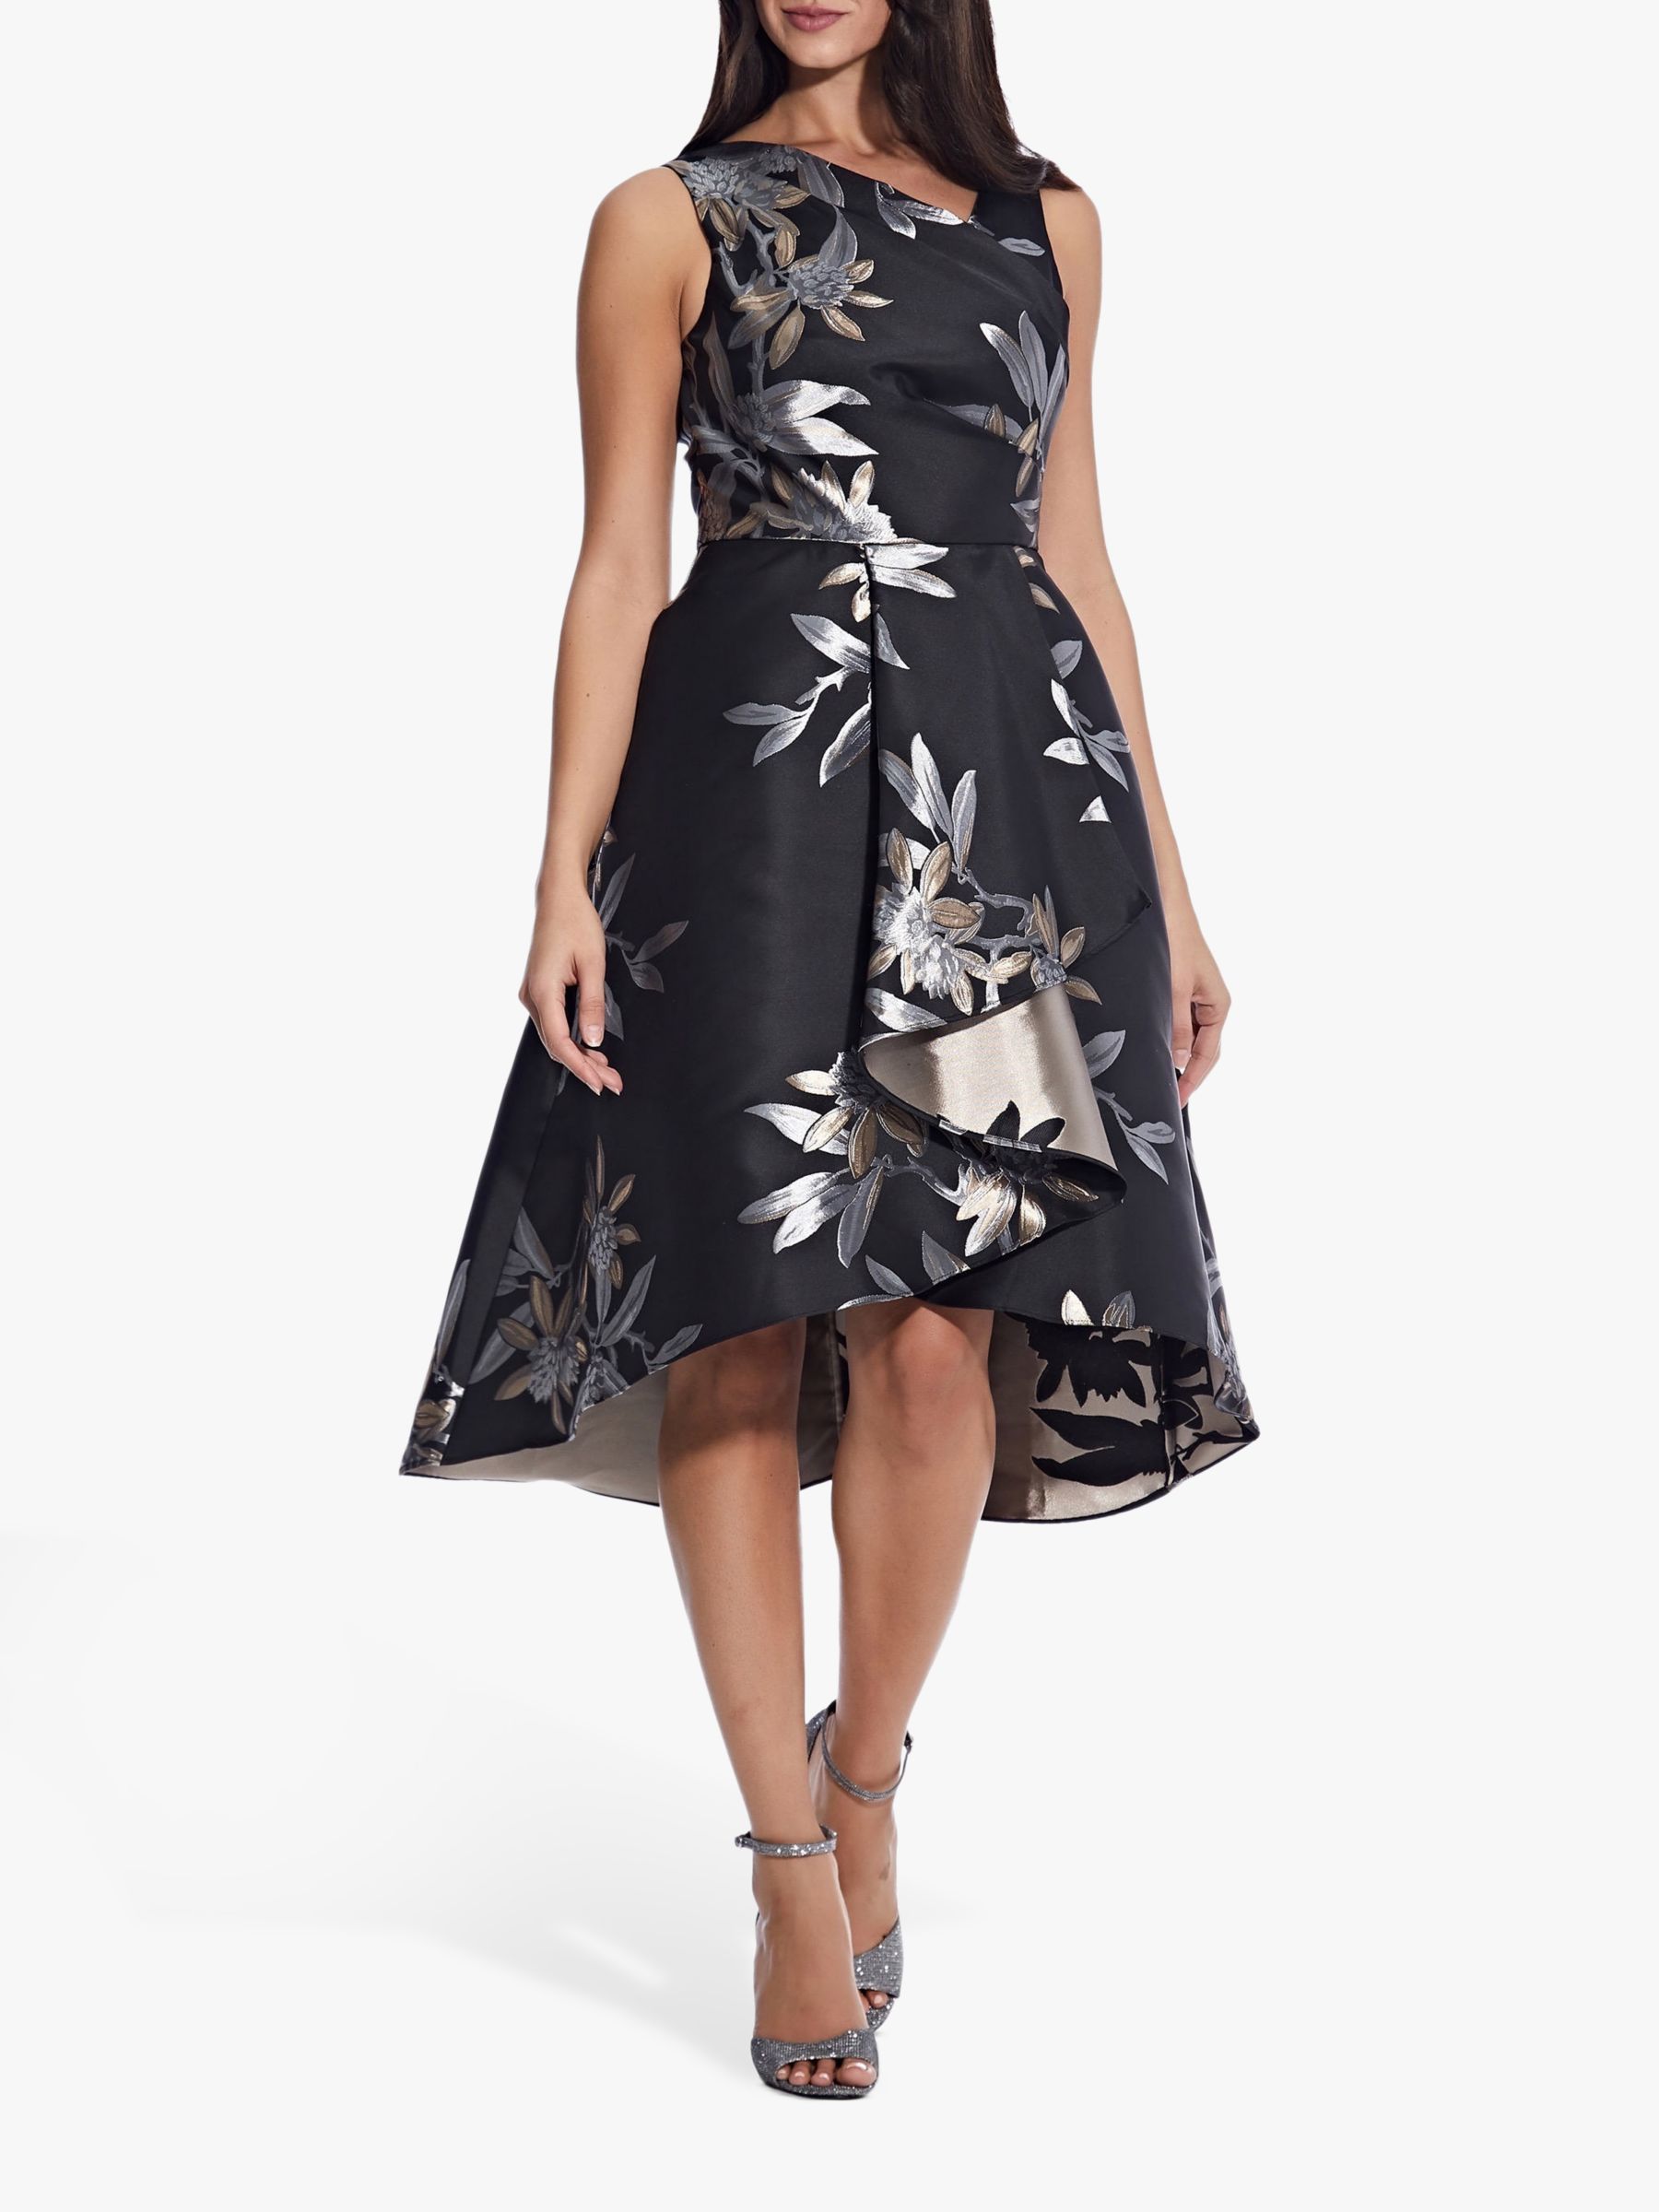 Adrianna Papell Floral Jacquard Dress, Black/Multi, 8